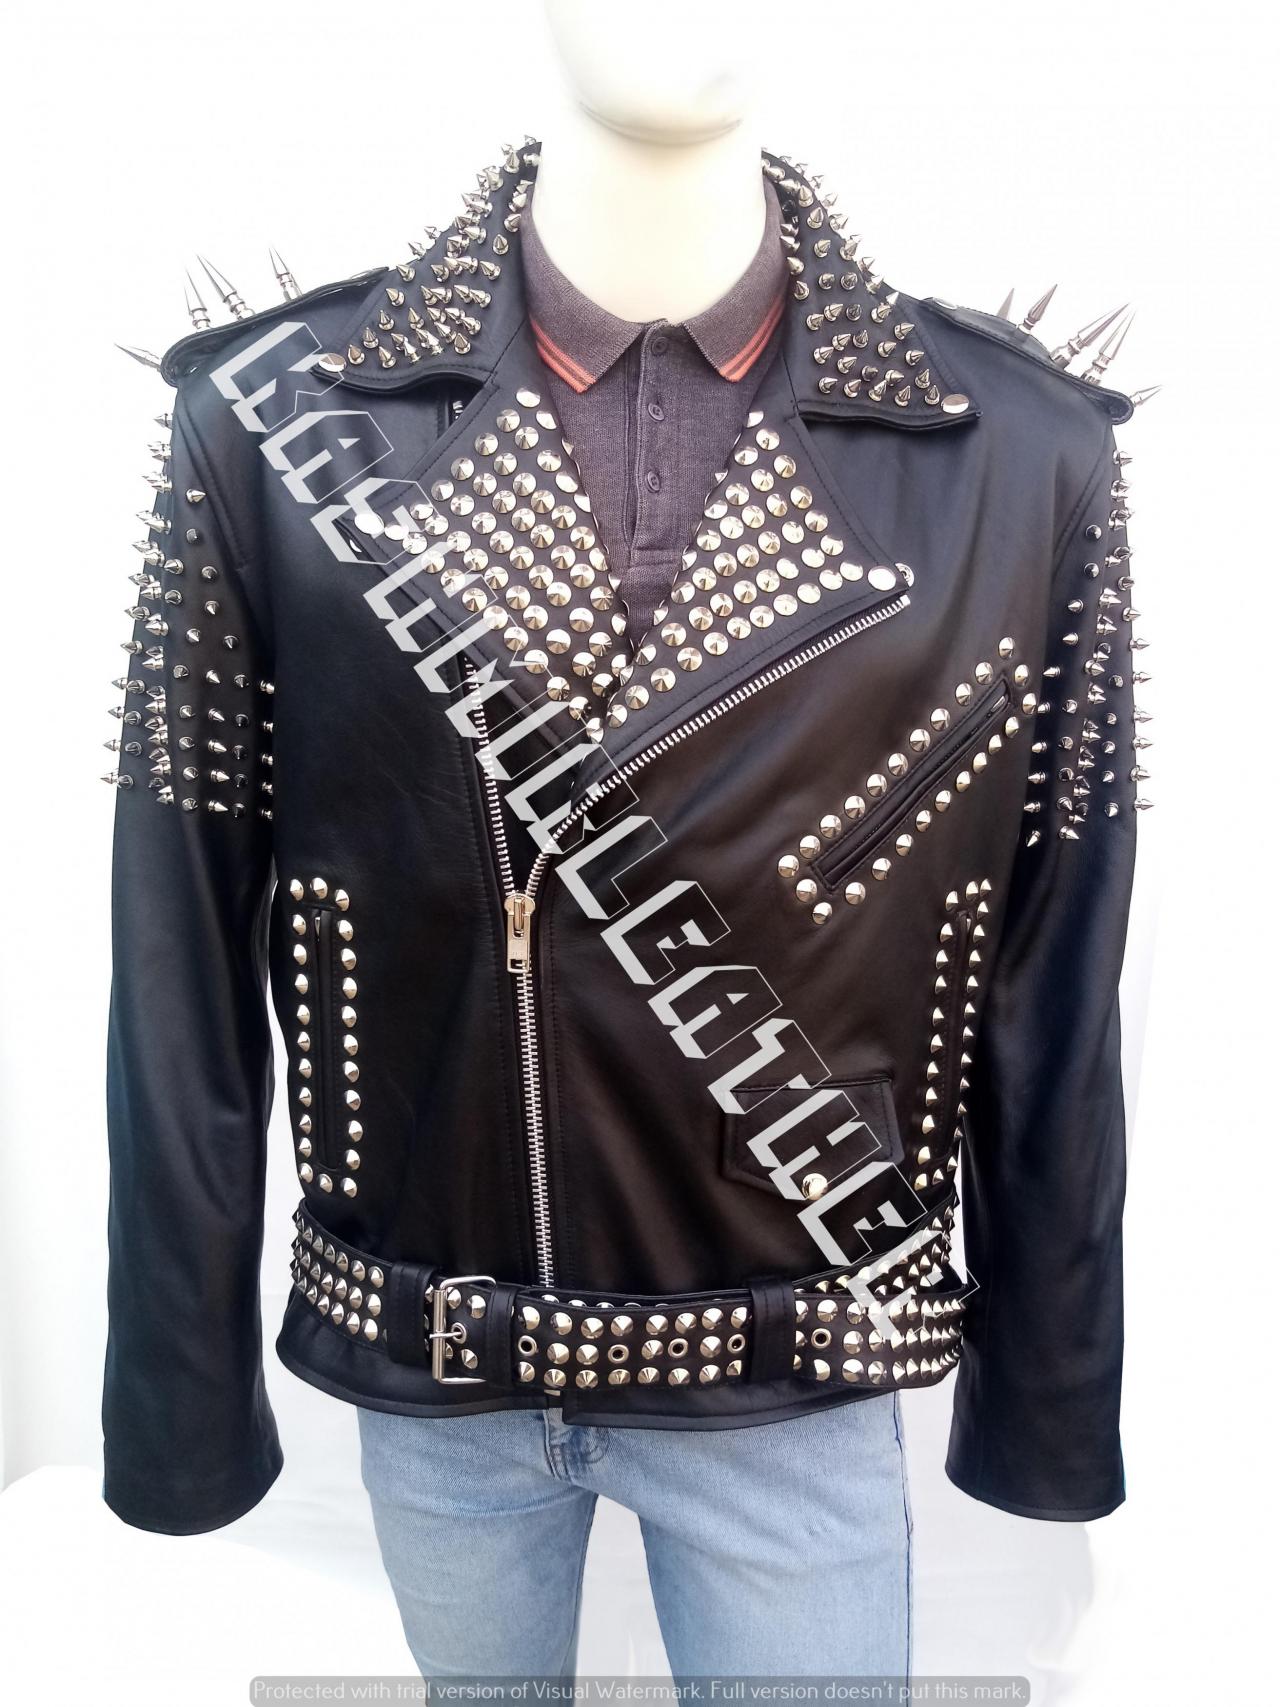 Mens Black Silver Long Spiked Studded Punk Rock Brando Style Cowhide Biker Leather Jacket Belted